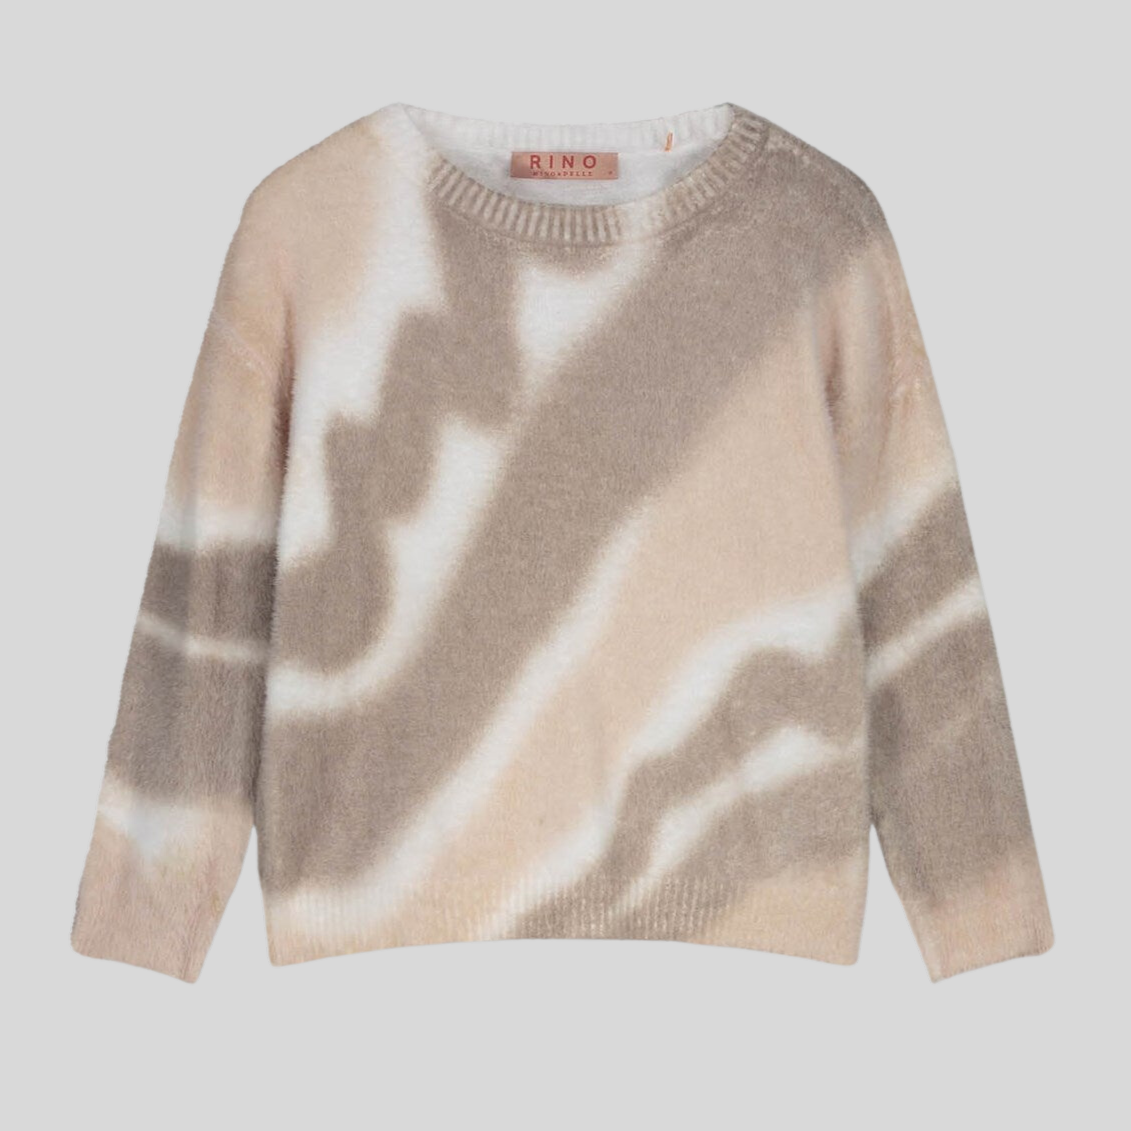 Gotstyle Fashion - Rino and Pelle Sweaters Wavy Bands Print Soft Sweater - Caramel Mix